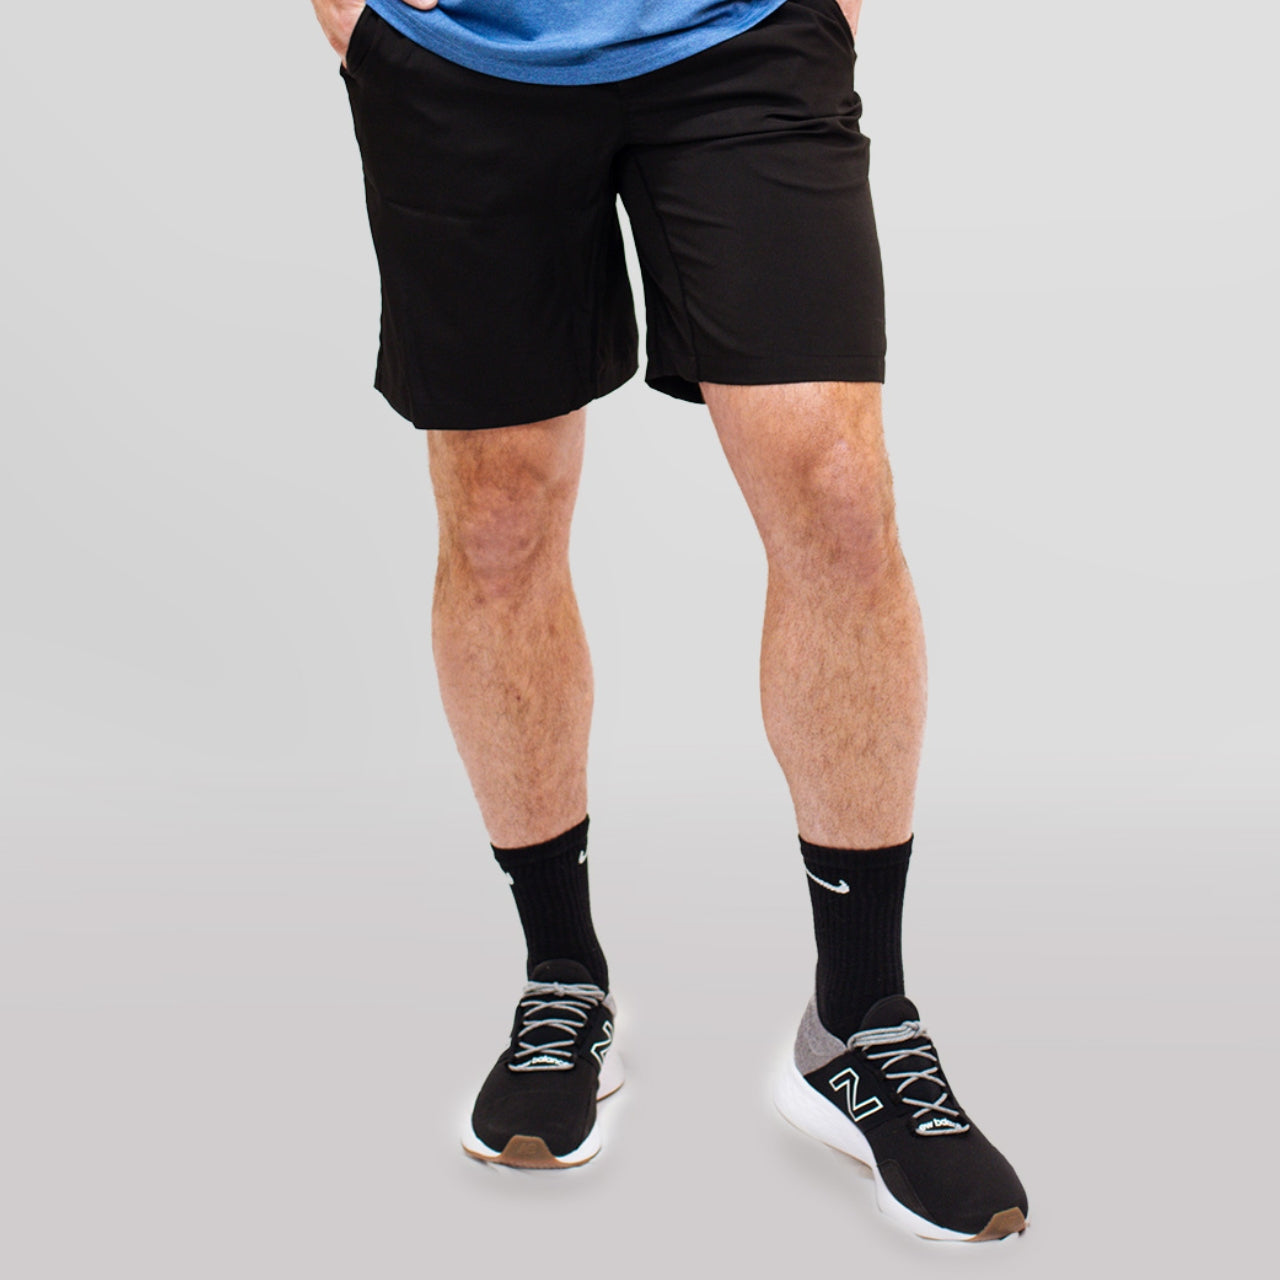 Black Athletic Shorts for Tall Slim Men